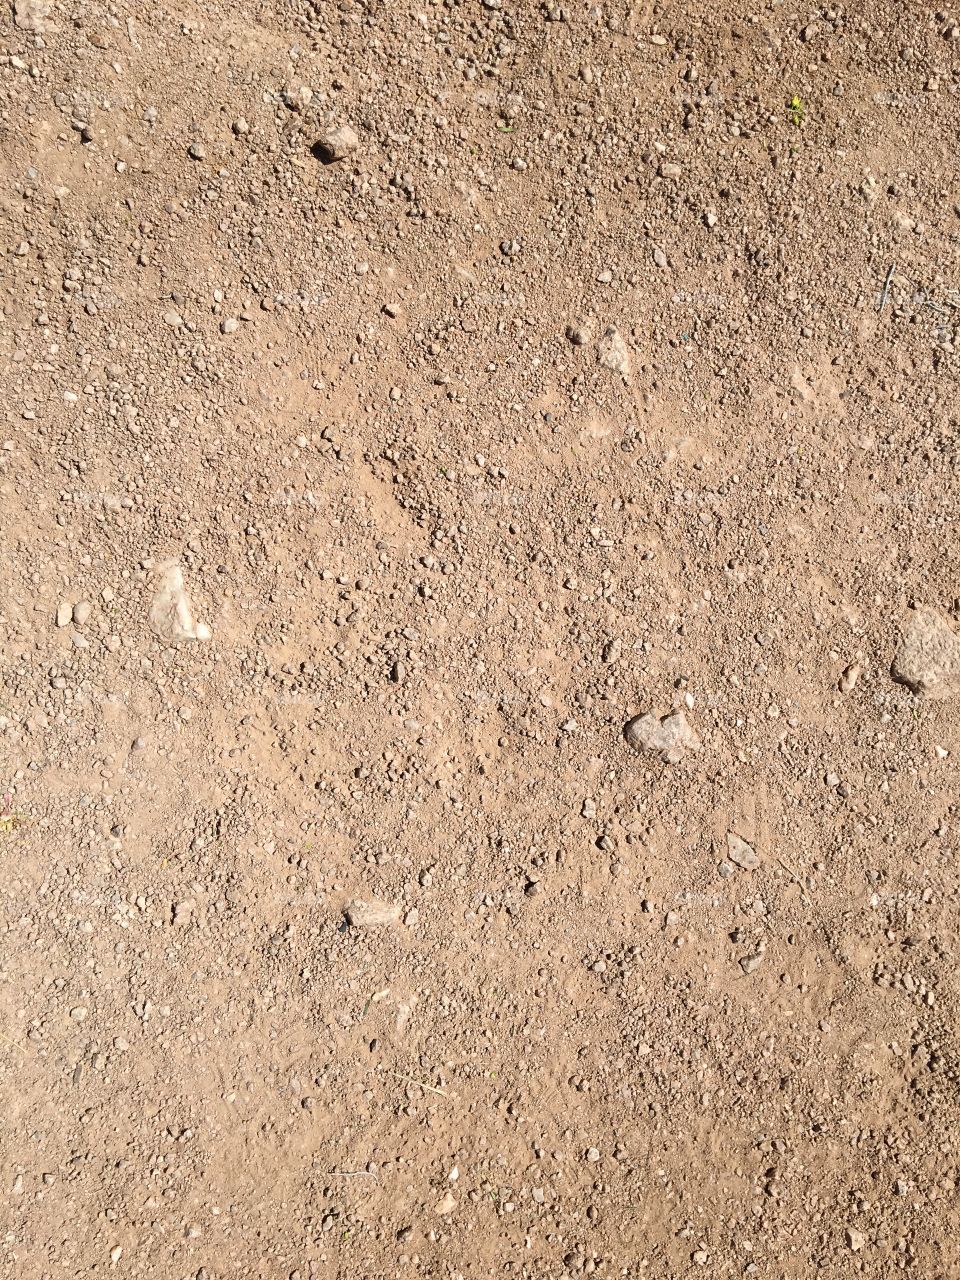 Dirt.